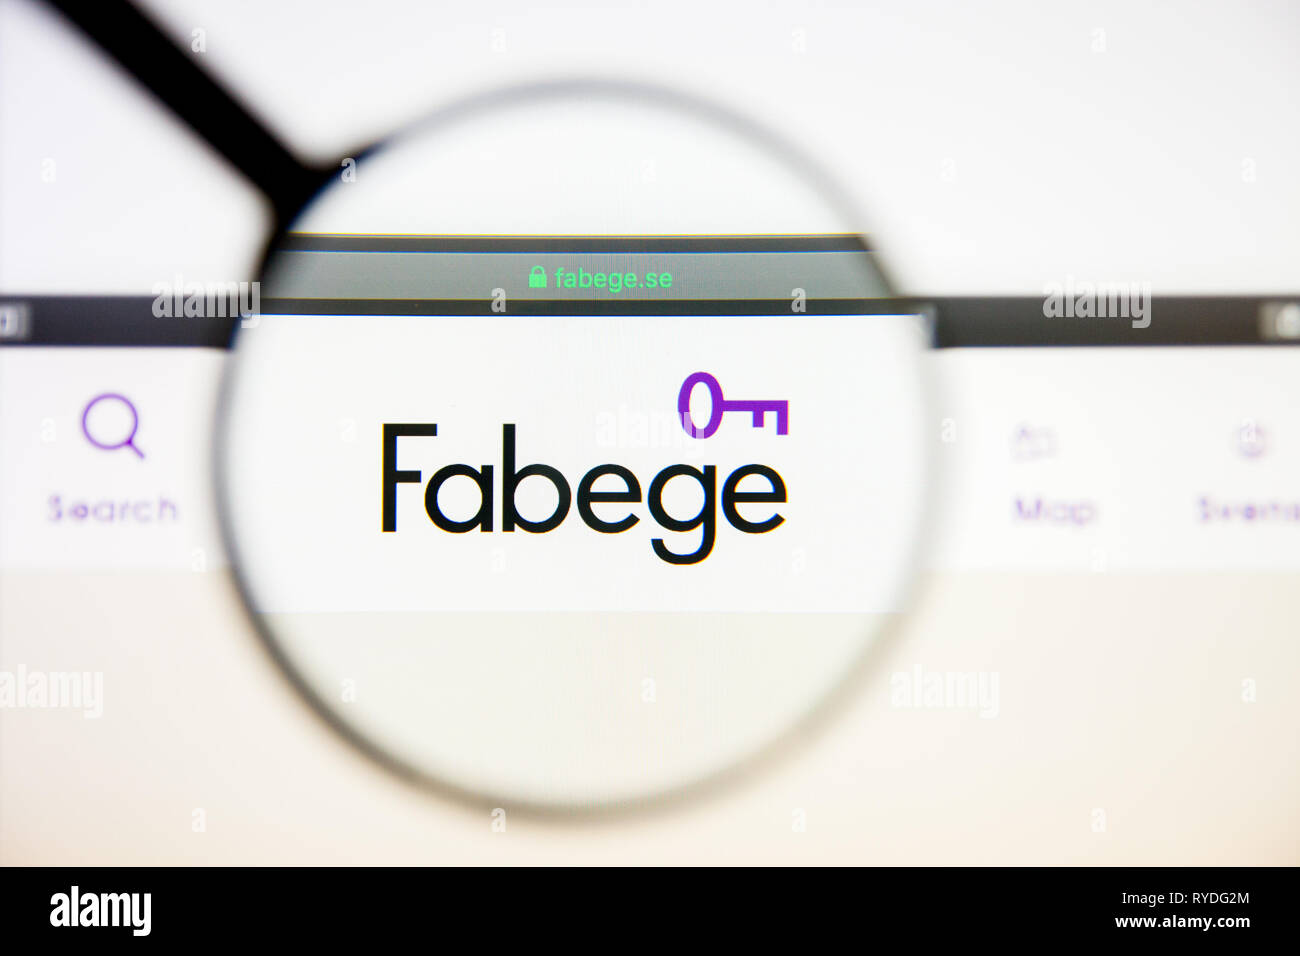 Los Angeles, Kalifornien, USA - 5. März 2019: Fabege AB-Homepage. Fabege AB Logo sichtbar auf dem Display, Illustrative Editorial Stockfoto